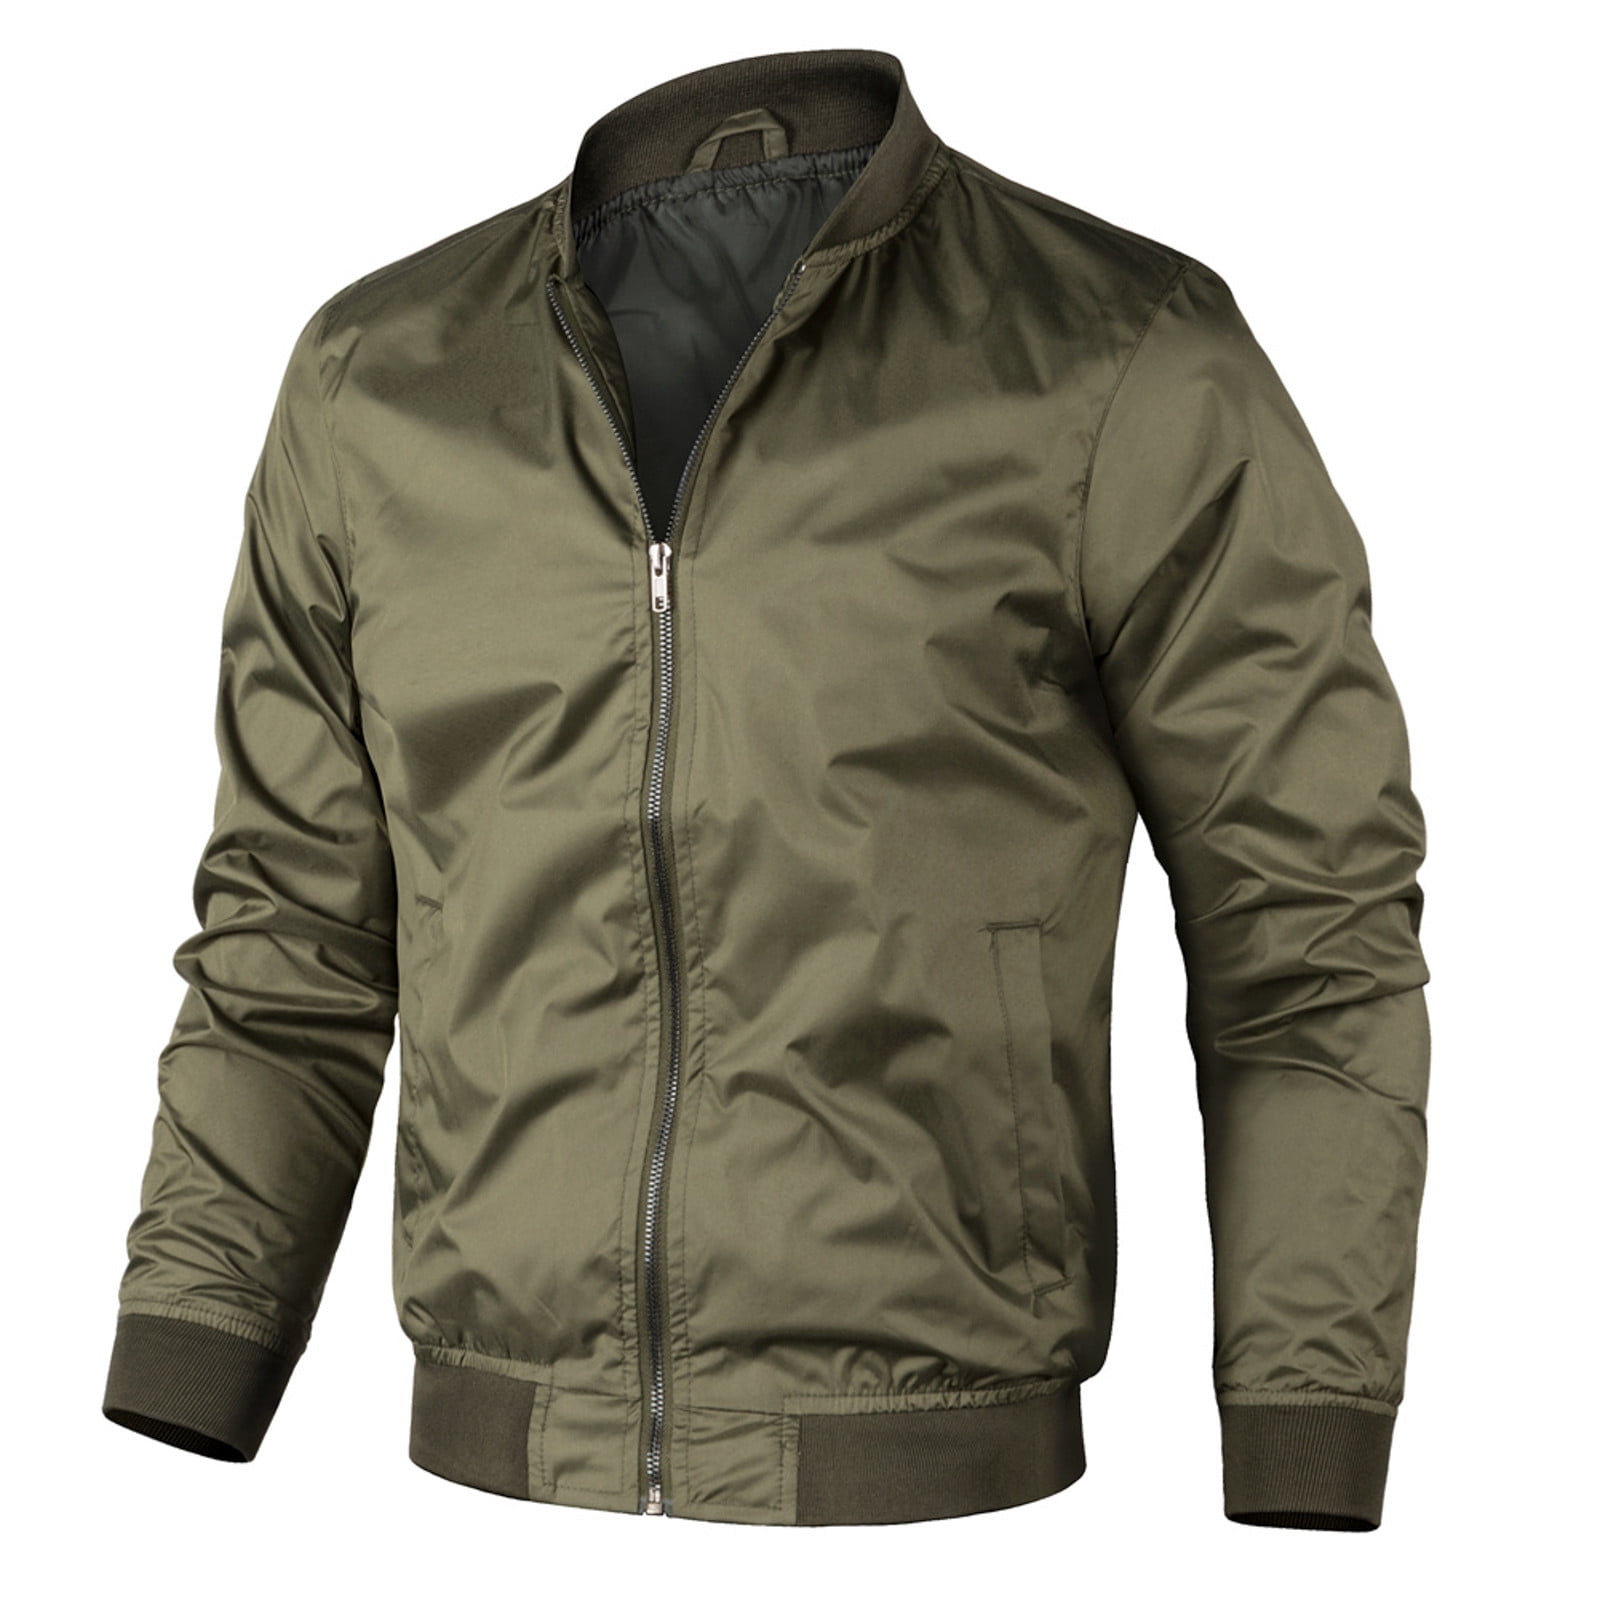 WoodLand Jackets & Coats for Men - Poshmark-thanhphatduhoc.com.vn